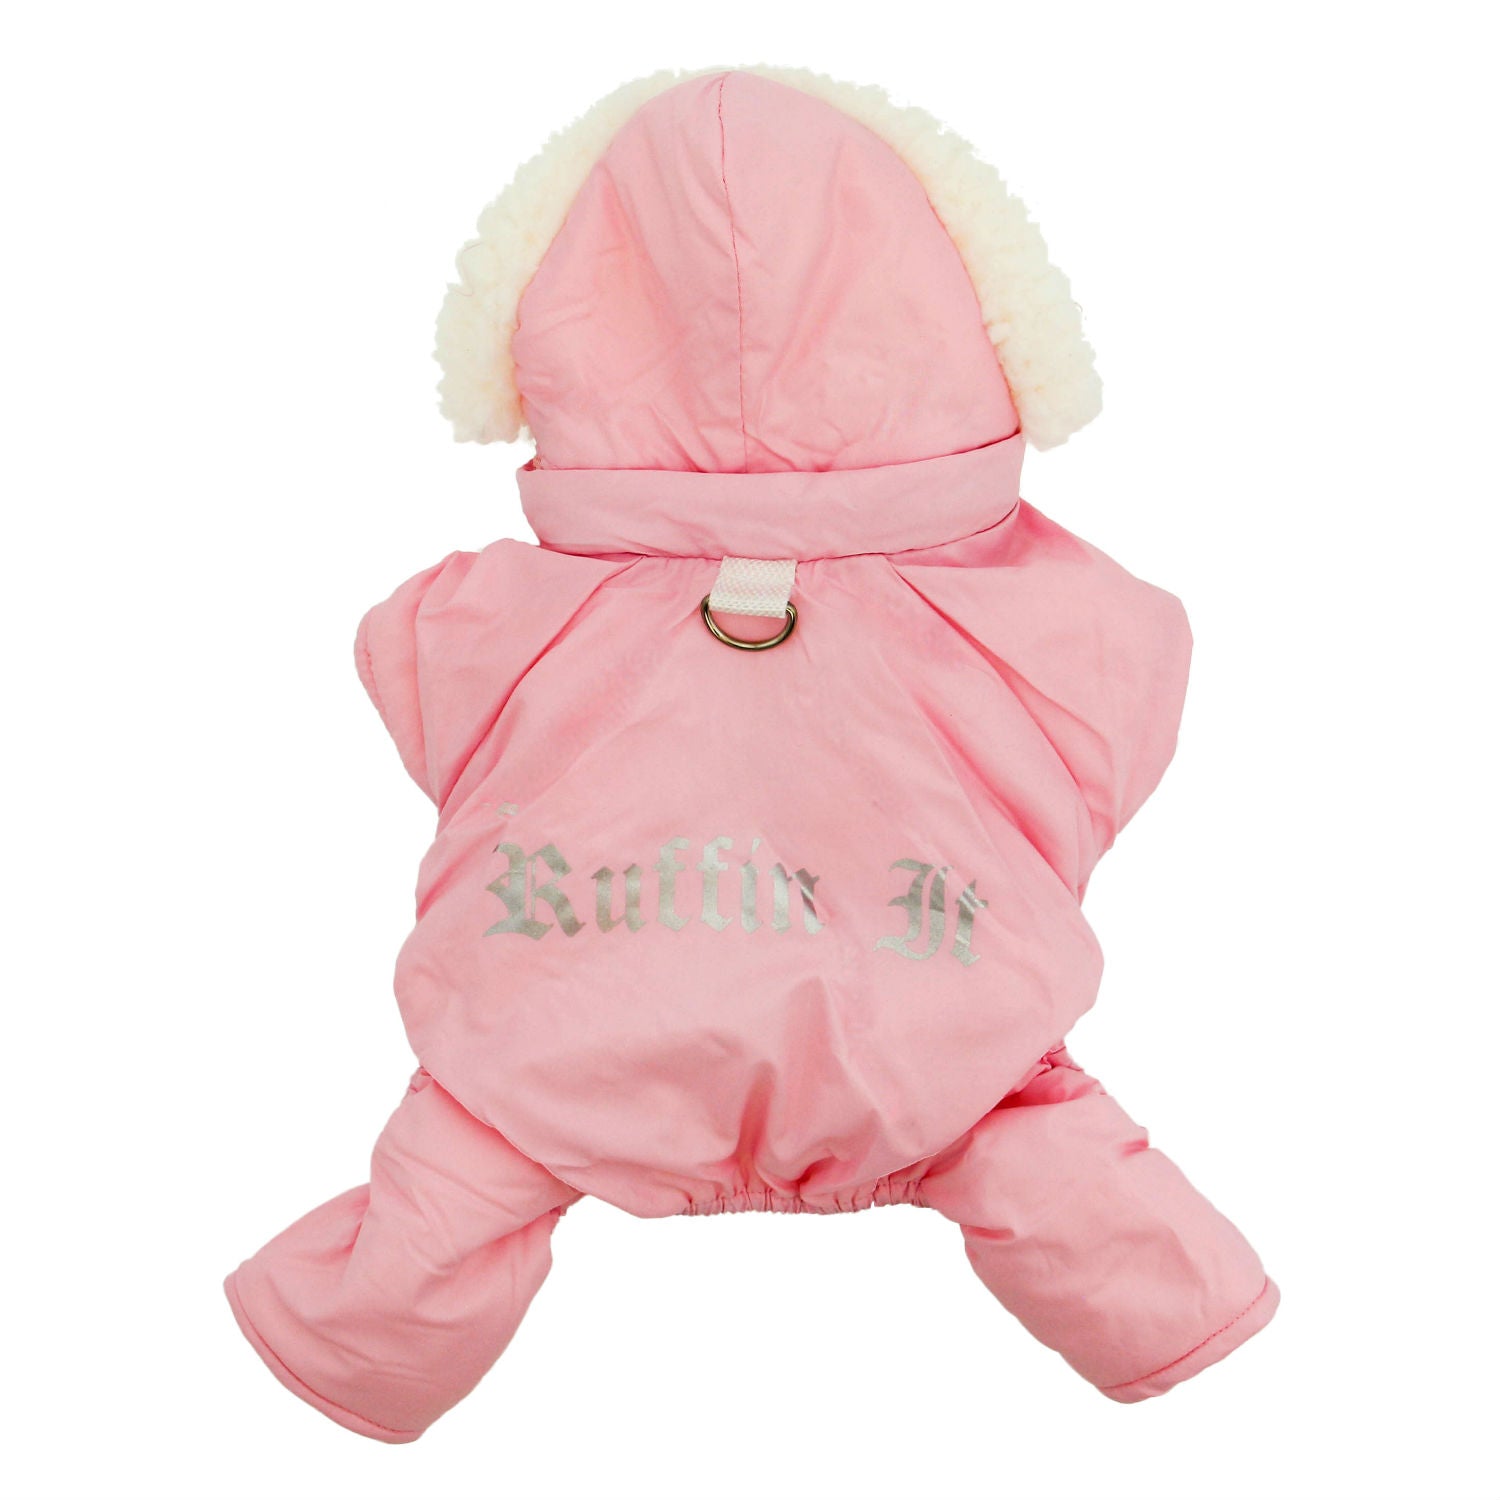 ruffin-it-snowsuit-pink-1561.jpg